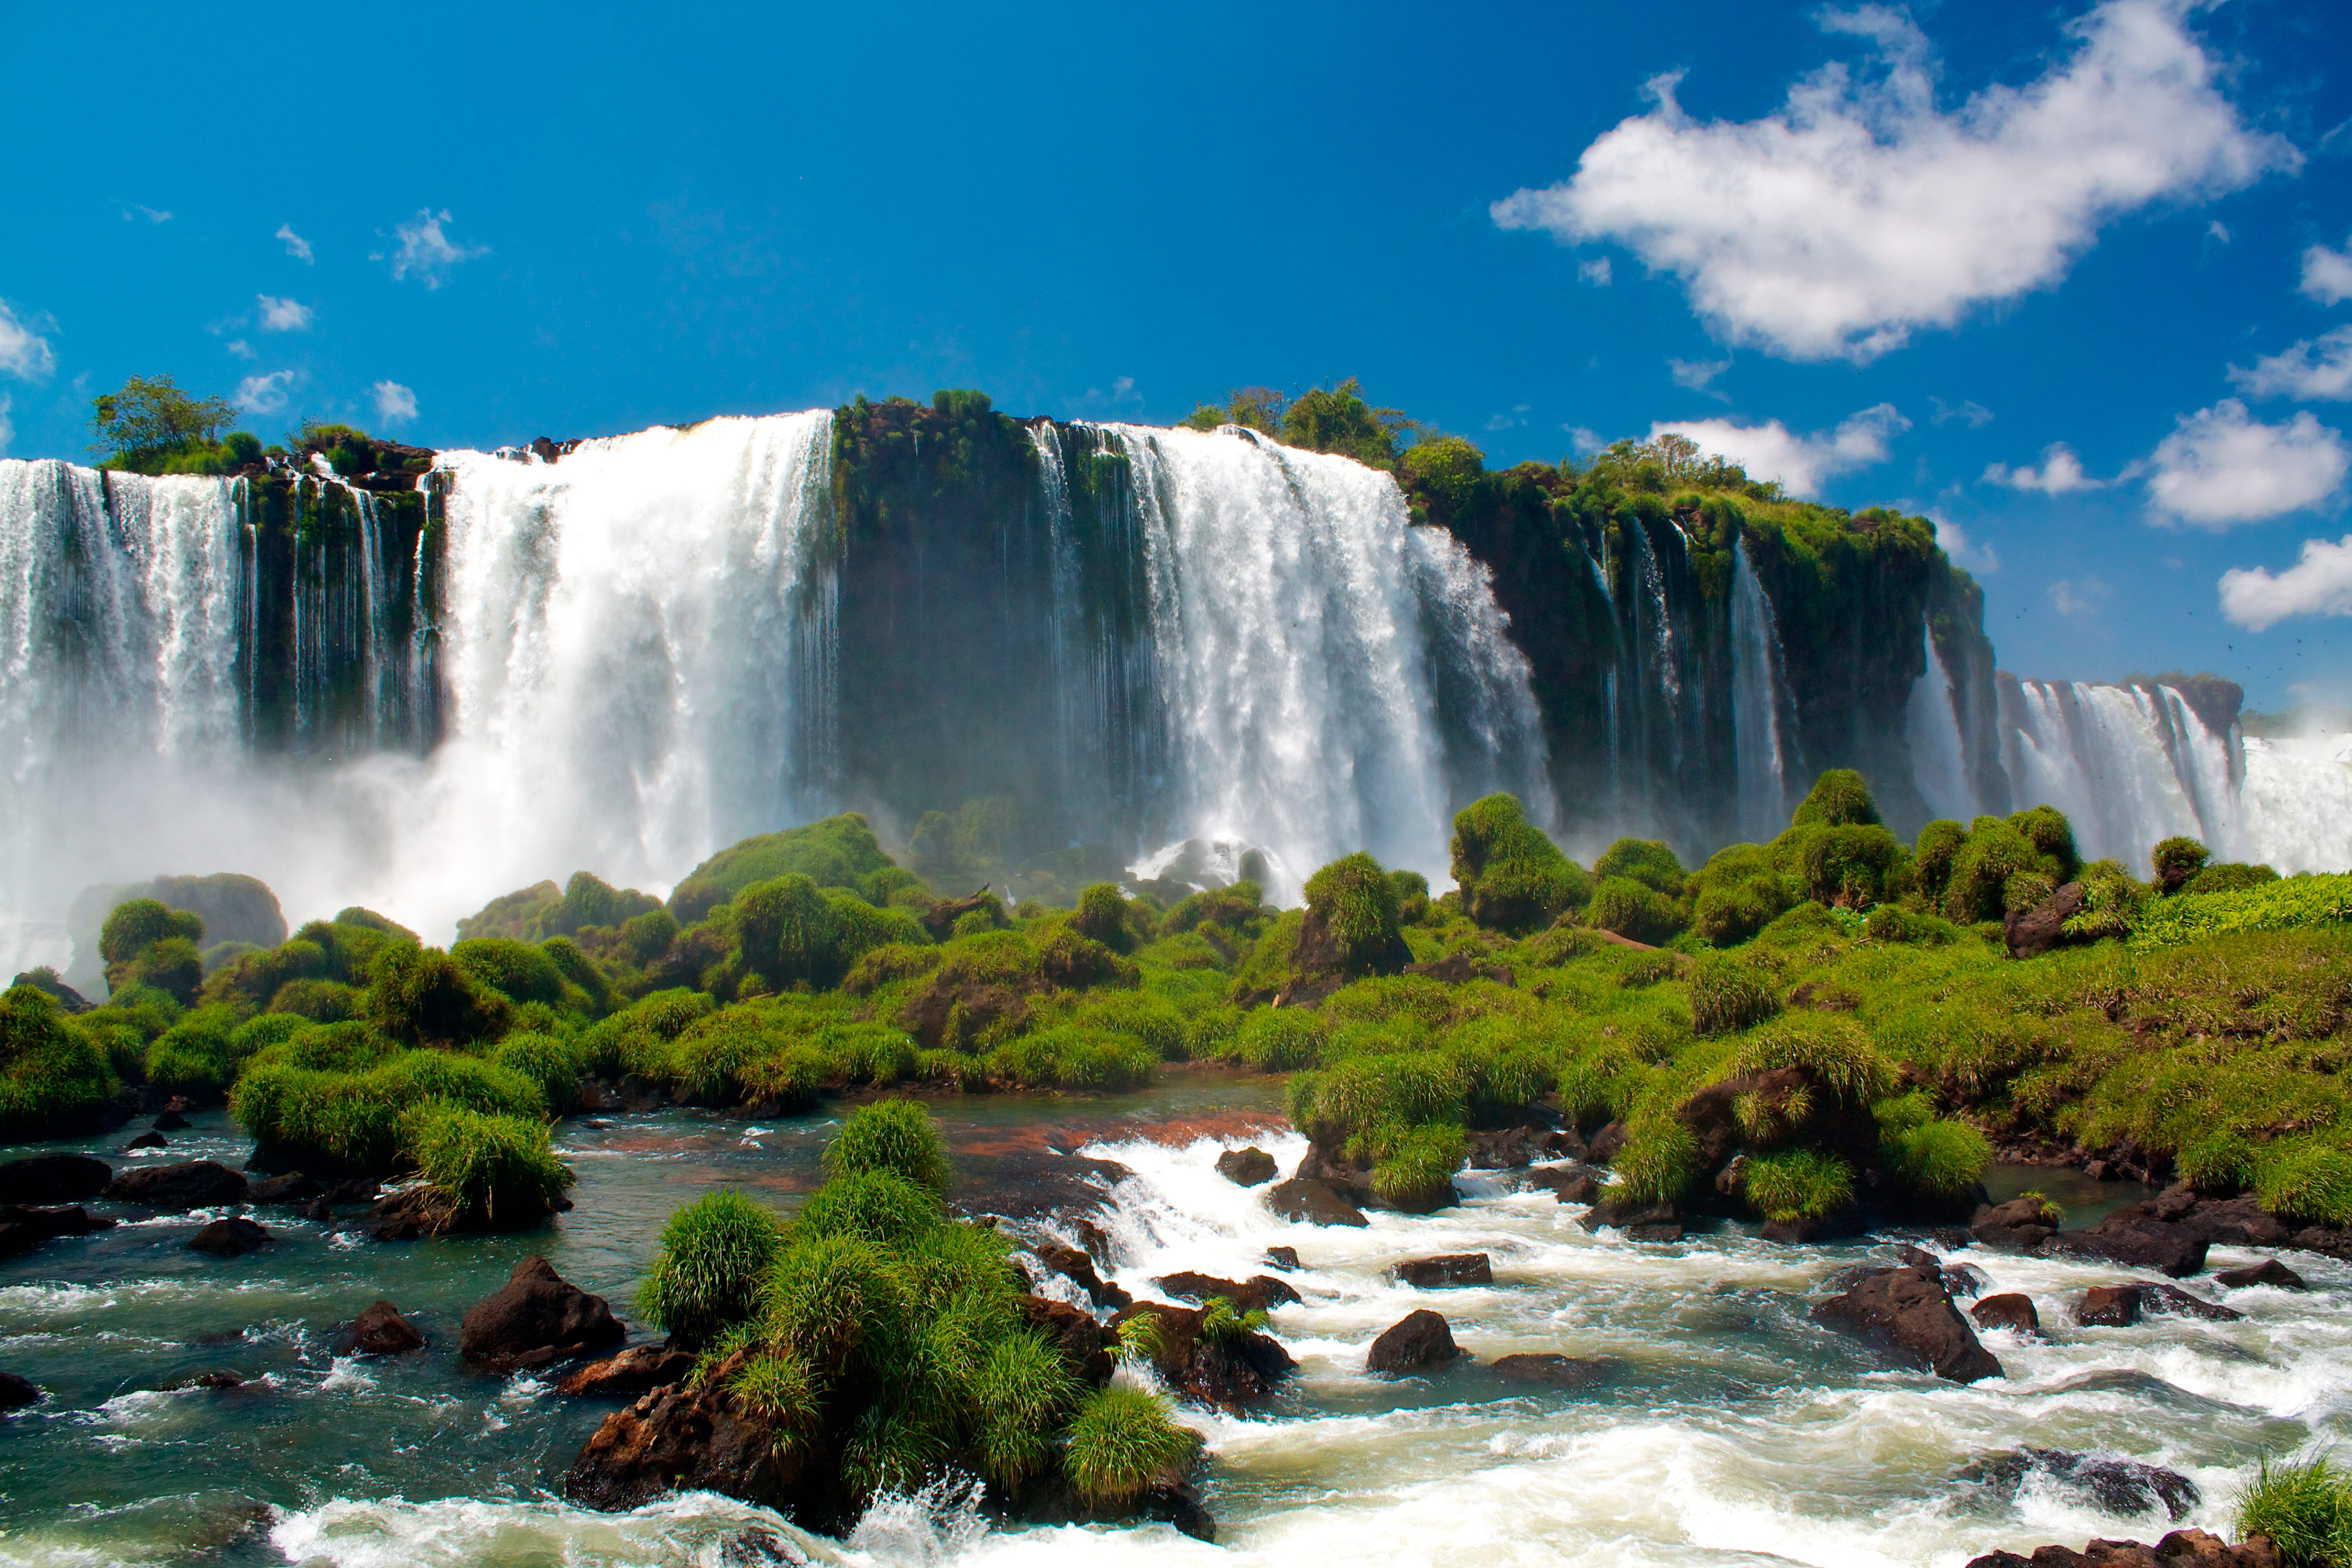 Широкий водопад в южной америке. Водопады Игуасу Аргентина Бразилия. Водопад Игуасу в Южной Америке. Парк Игуасу Аргентина растения. Водопад Игуасу панорама.